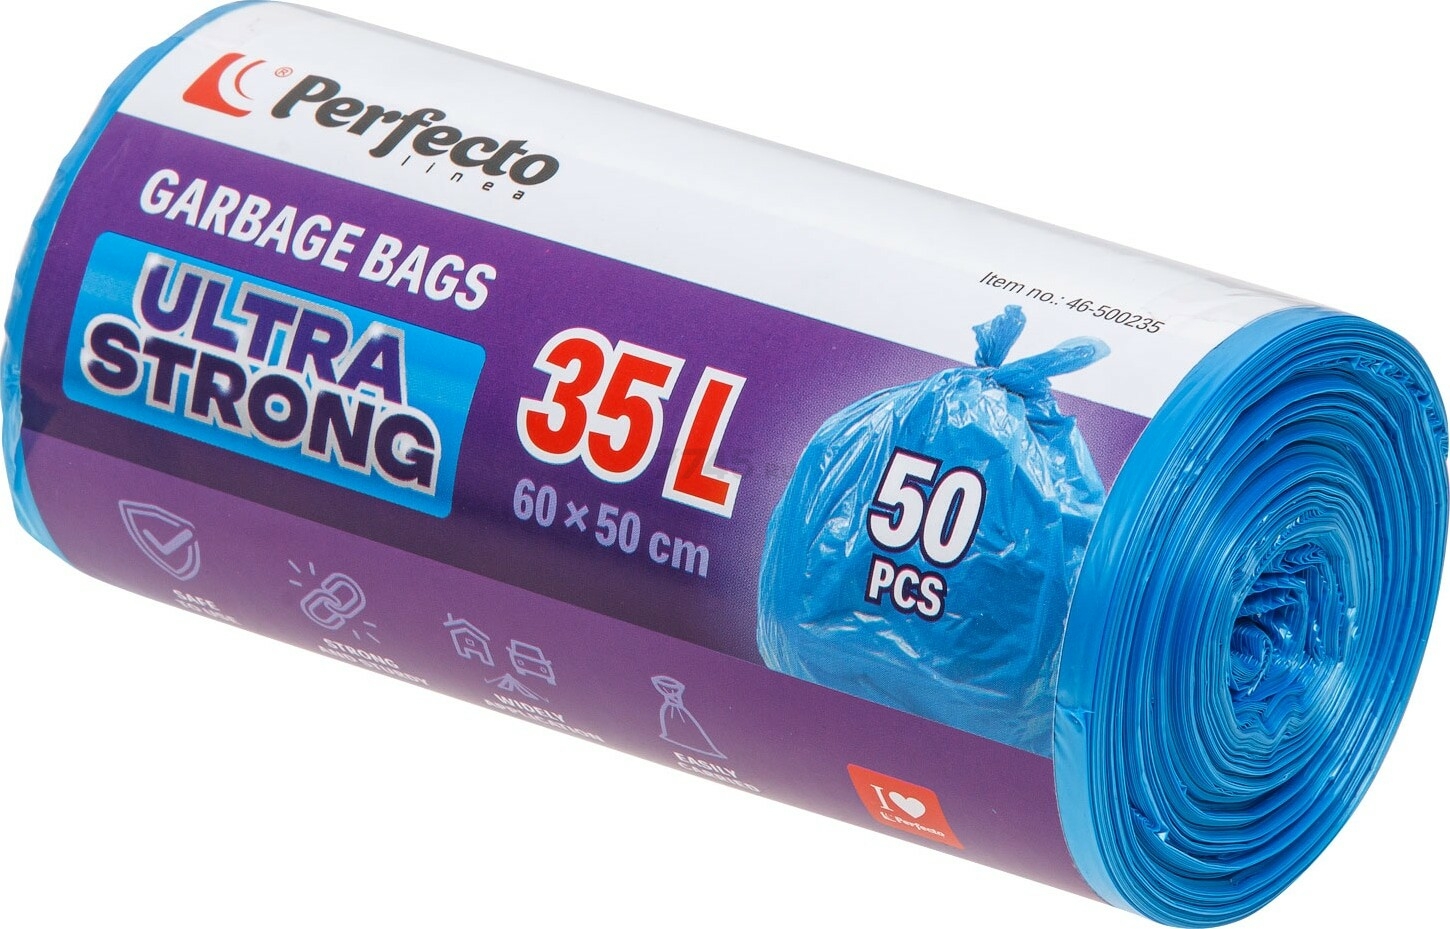 Пакеты для мусора PERFECTO LINEA Ultra strong 35 л 50 штук (46-500235)